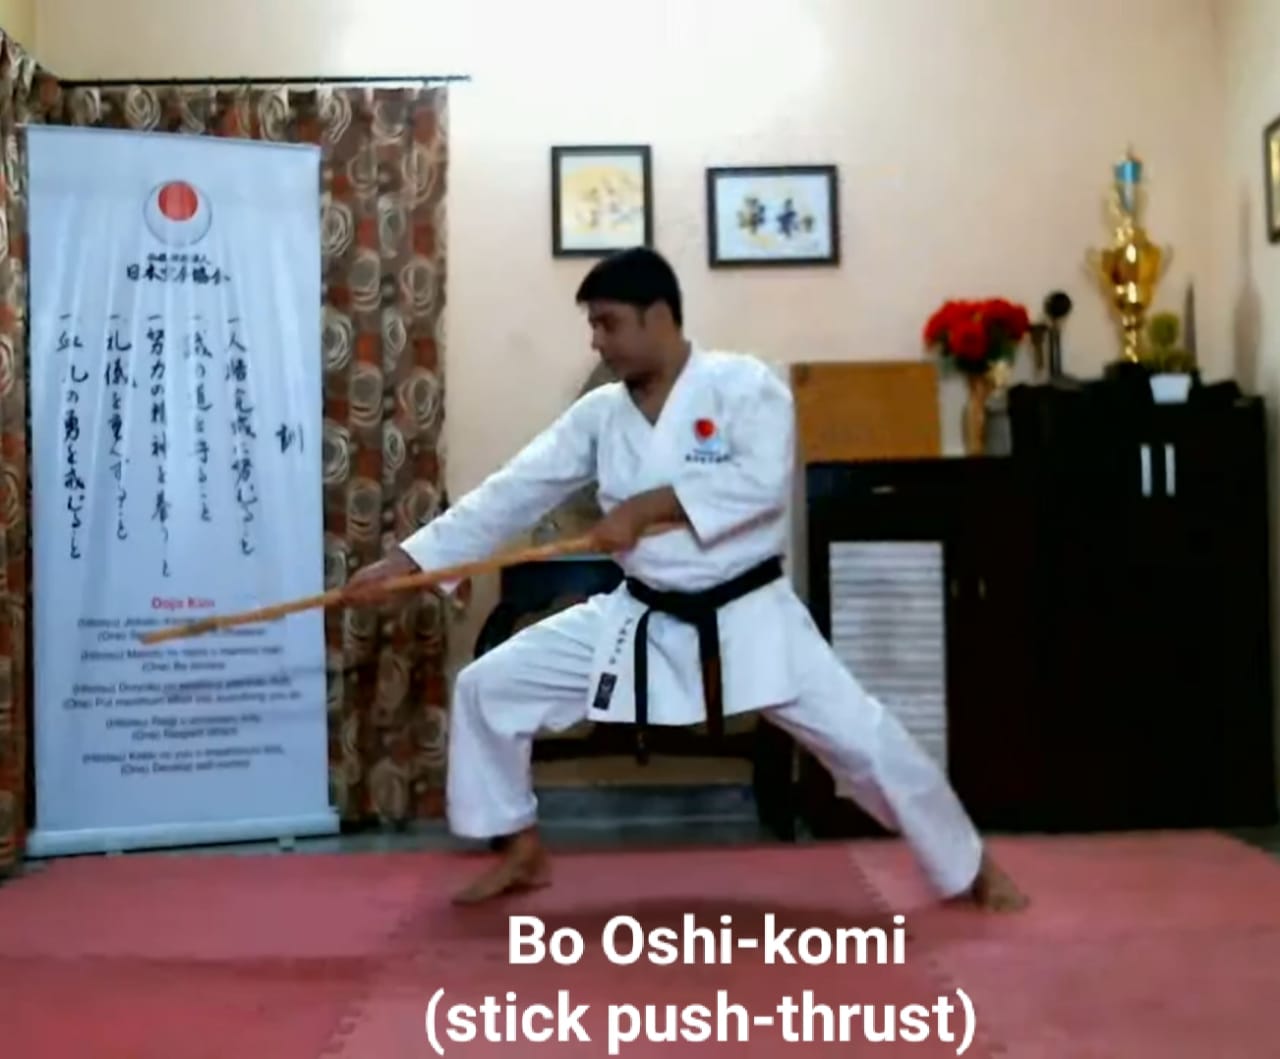 Global recognition of Kolkata Karate teachers